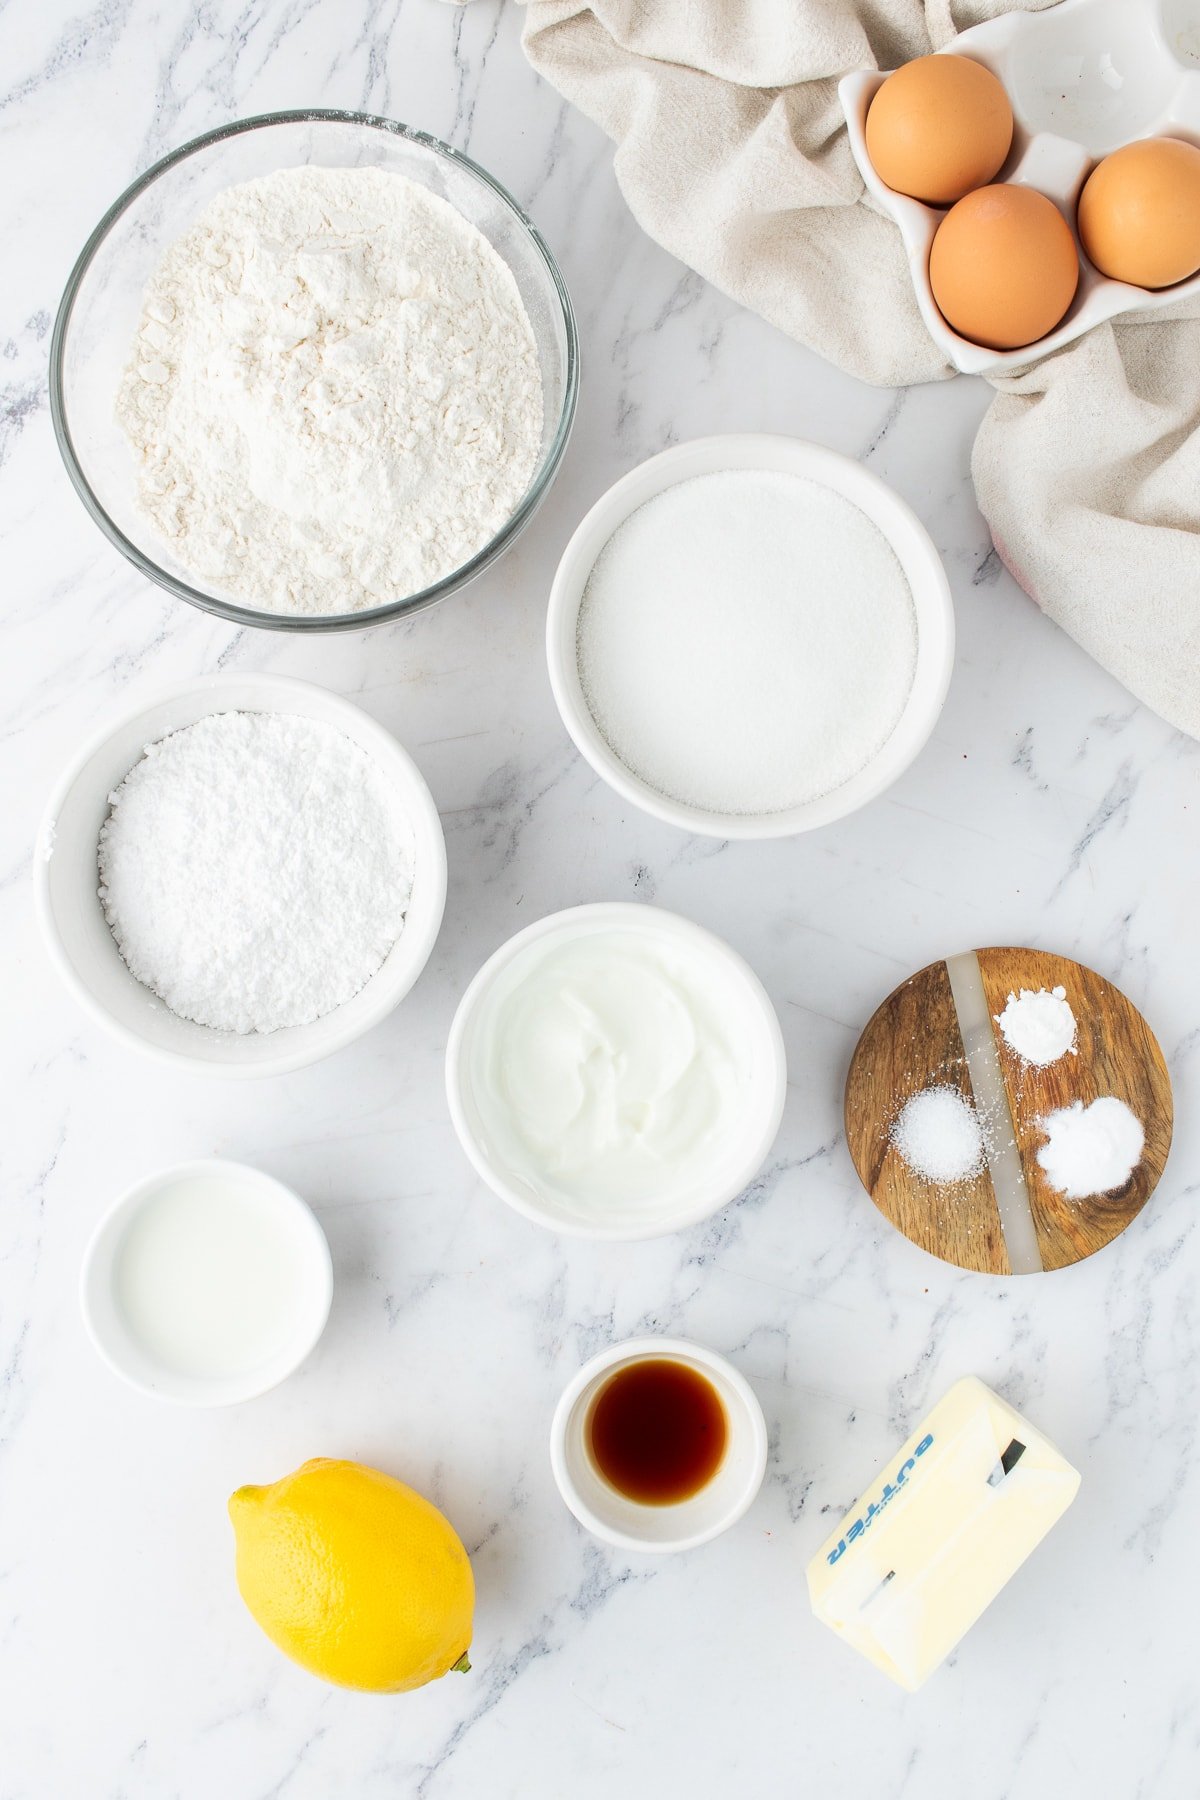 ingredients needed to make lemon pound cake